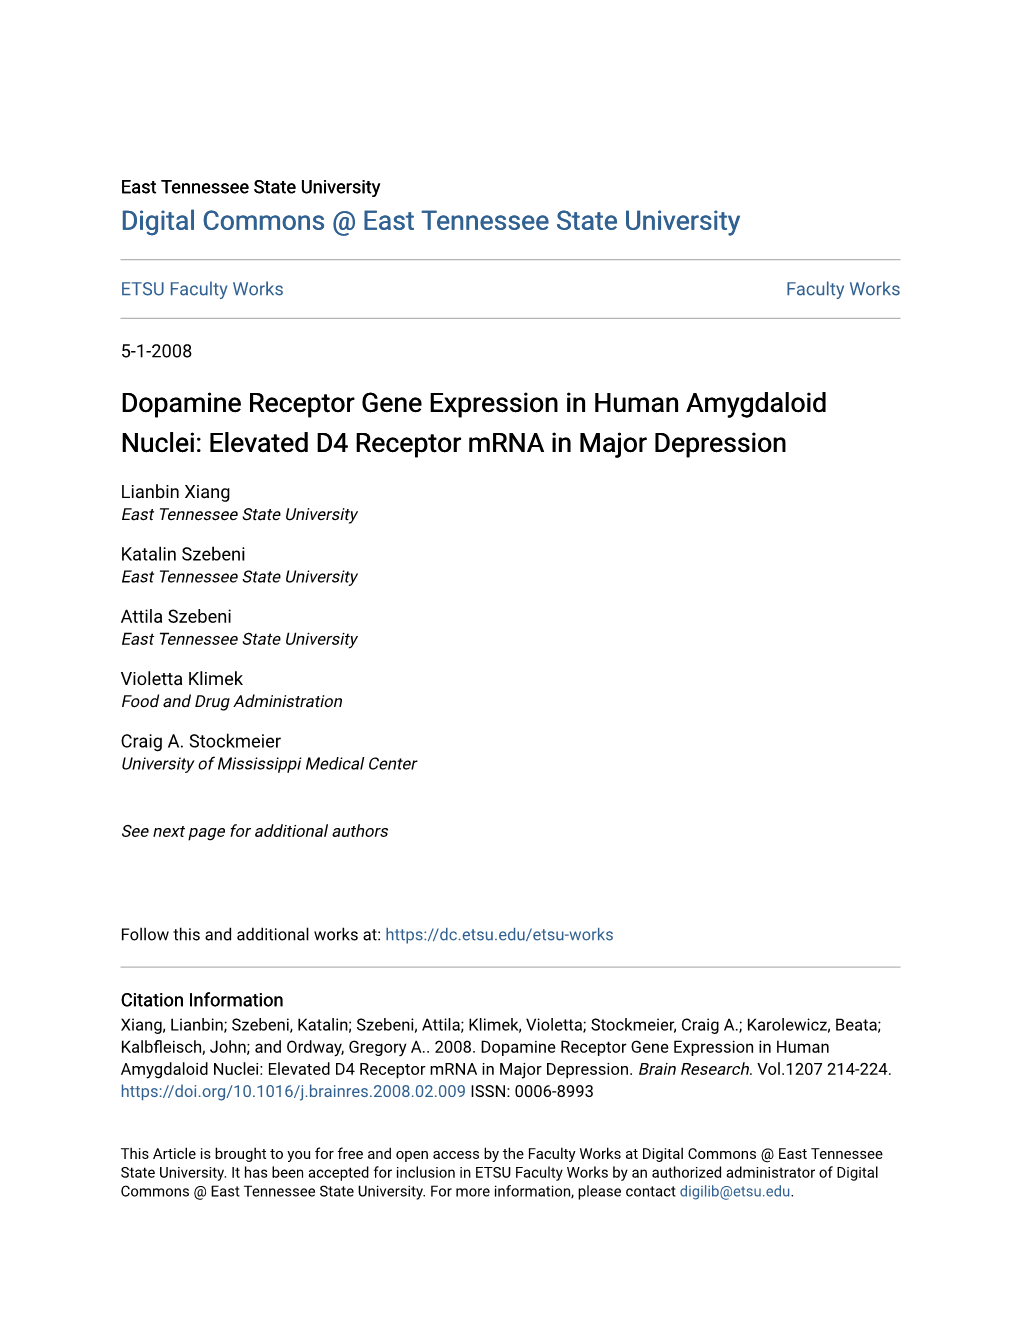 Dopamine Receptor Gene Expression in Human Amygdaloid Nuclei: Elevated D4 Receptor Mrna in Major Depression